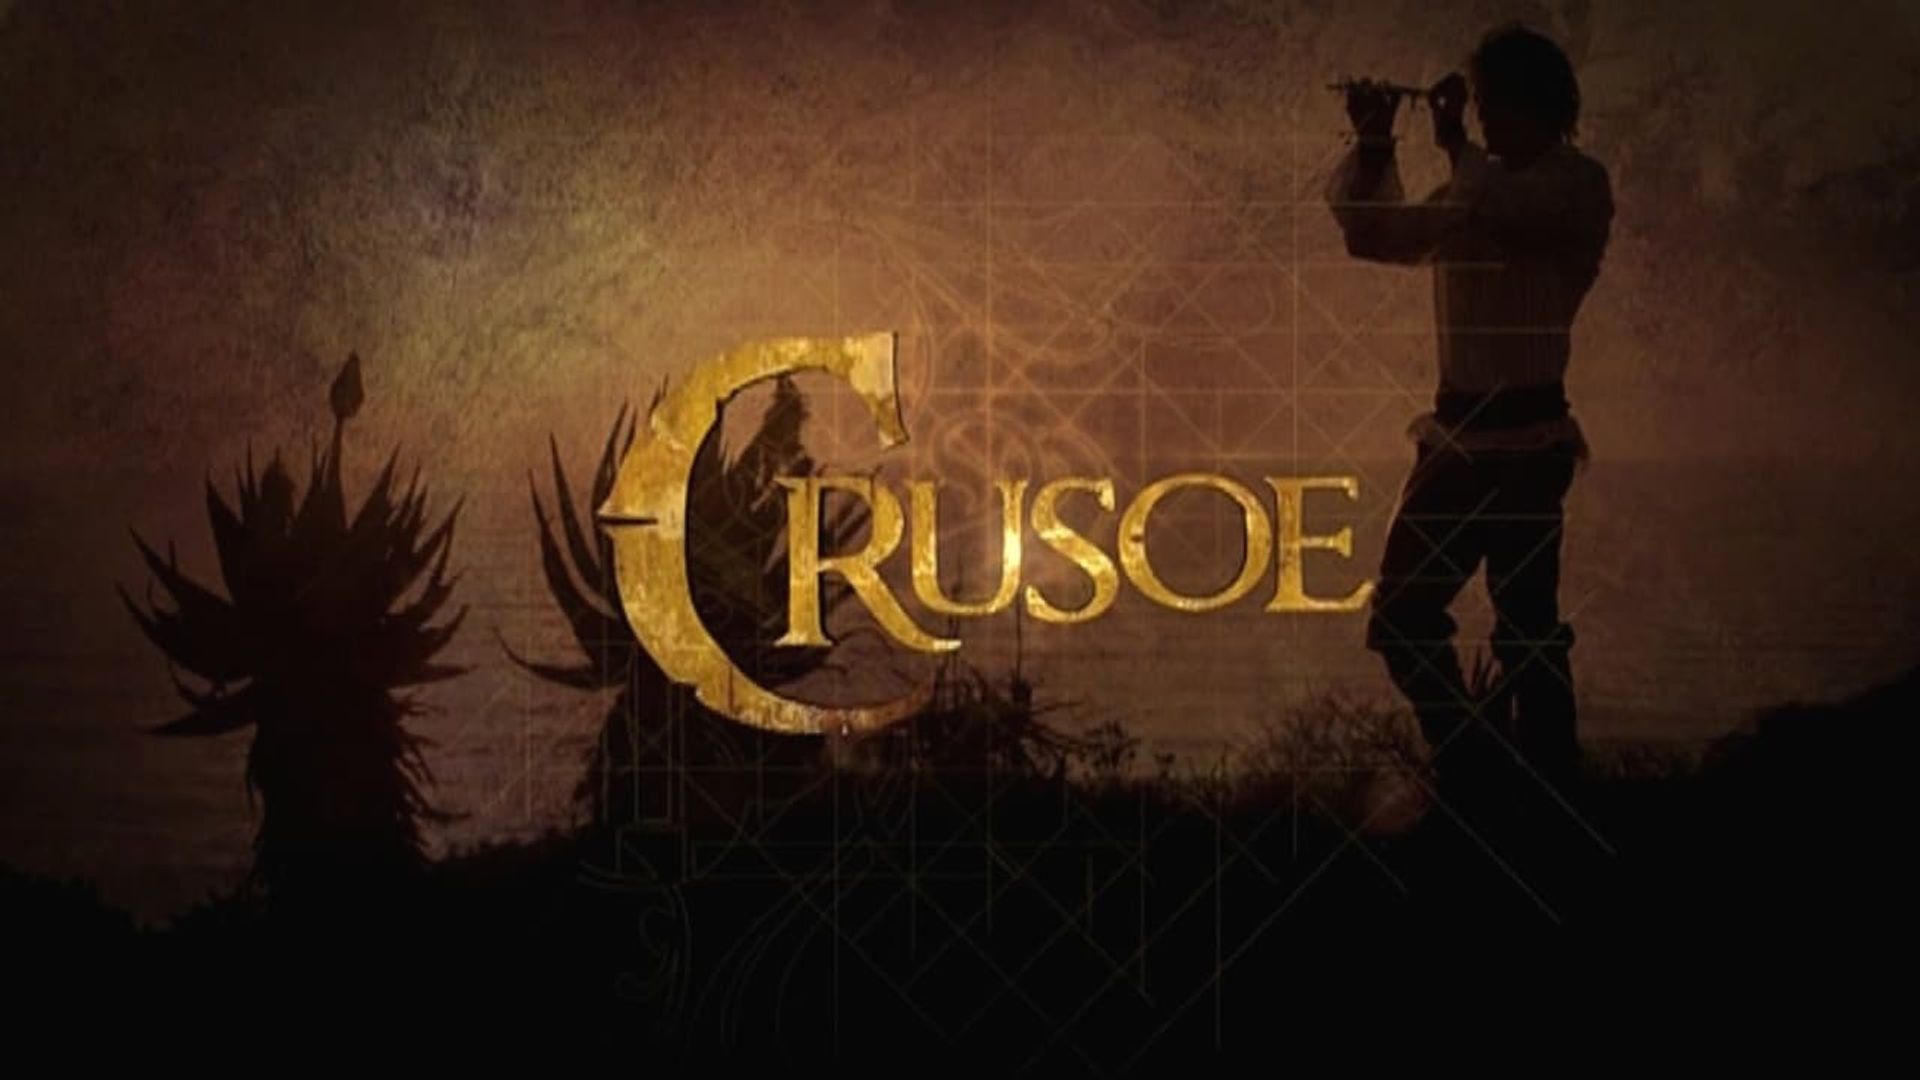 Crusoe background